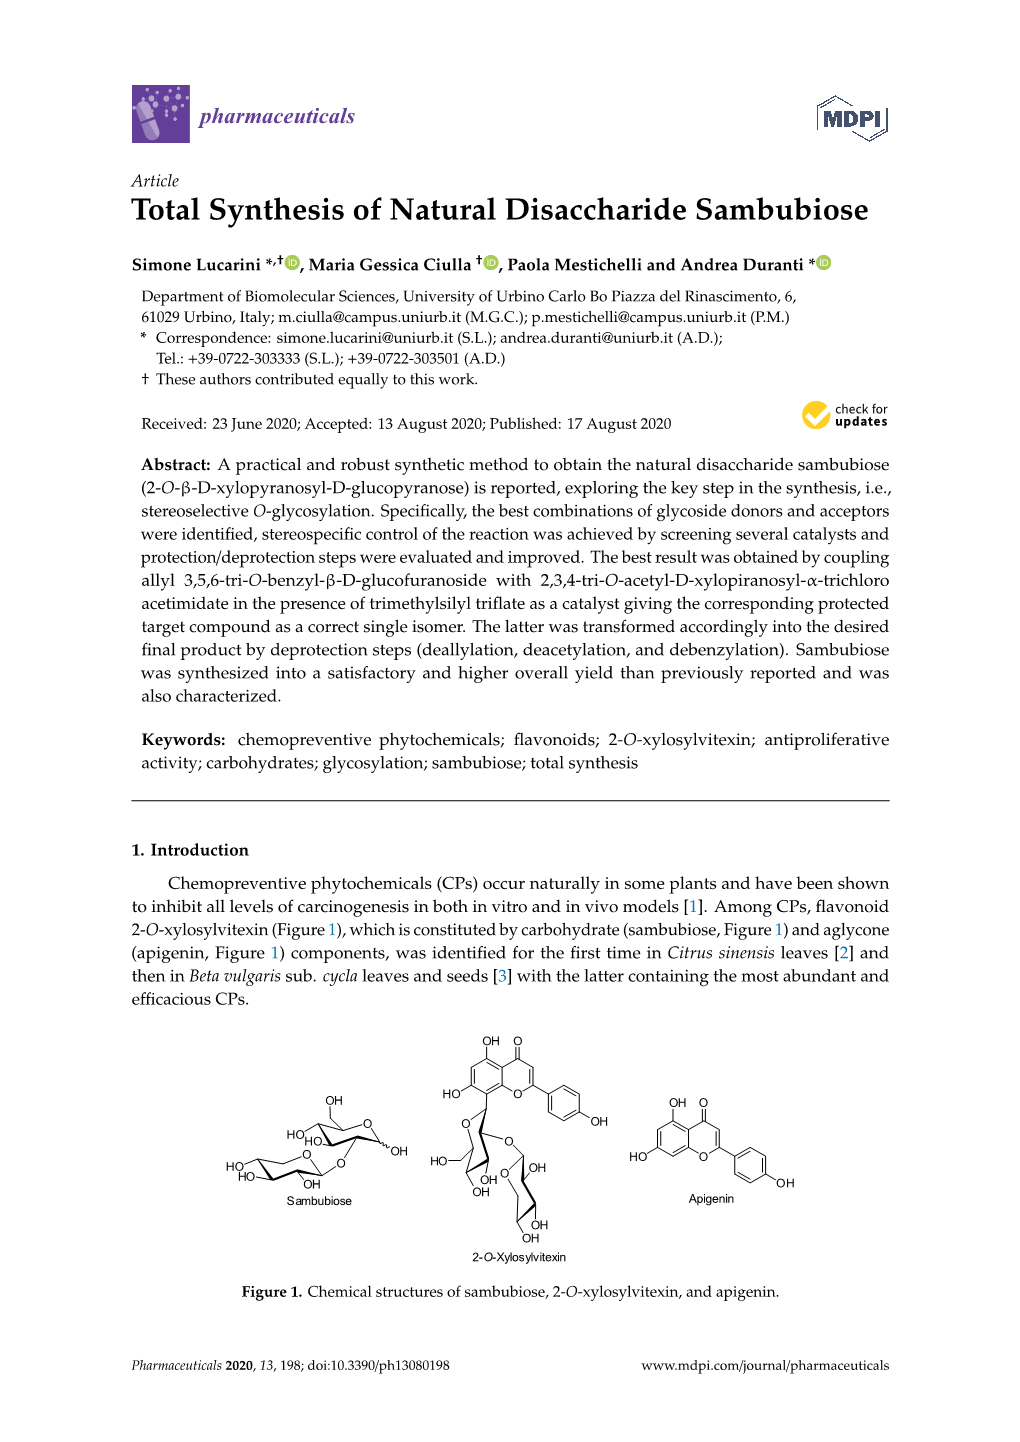 Total Synthesis of Natural Disaccharide Sambubiose Was Developed